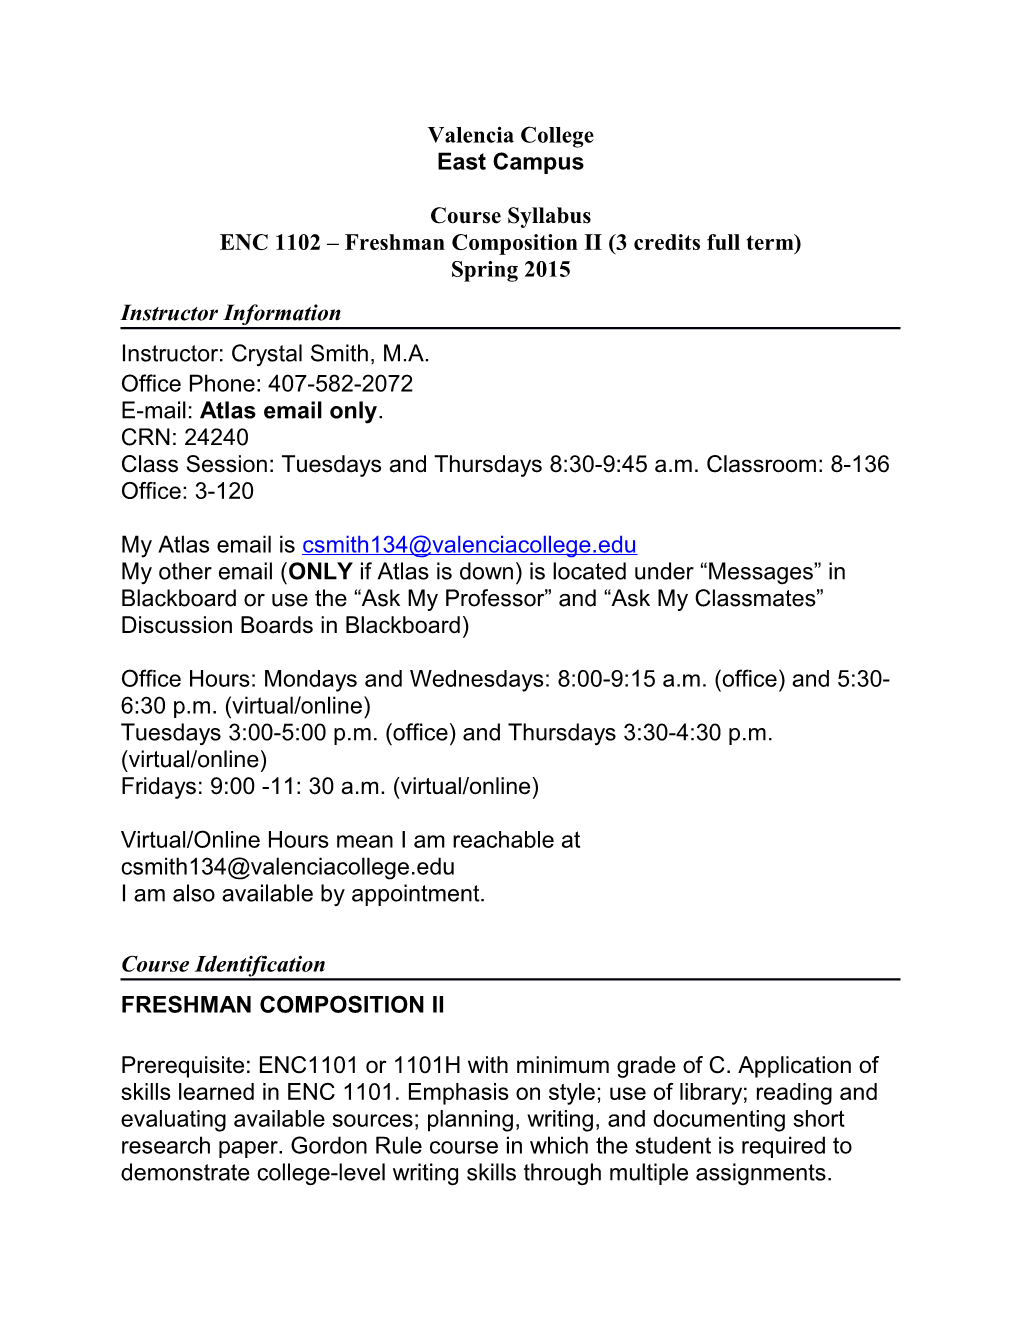 ENC 1102 Freshman Composition II (3 Credits Full Term)